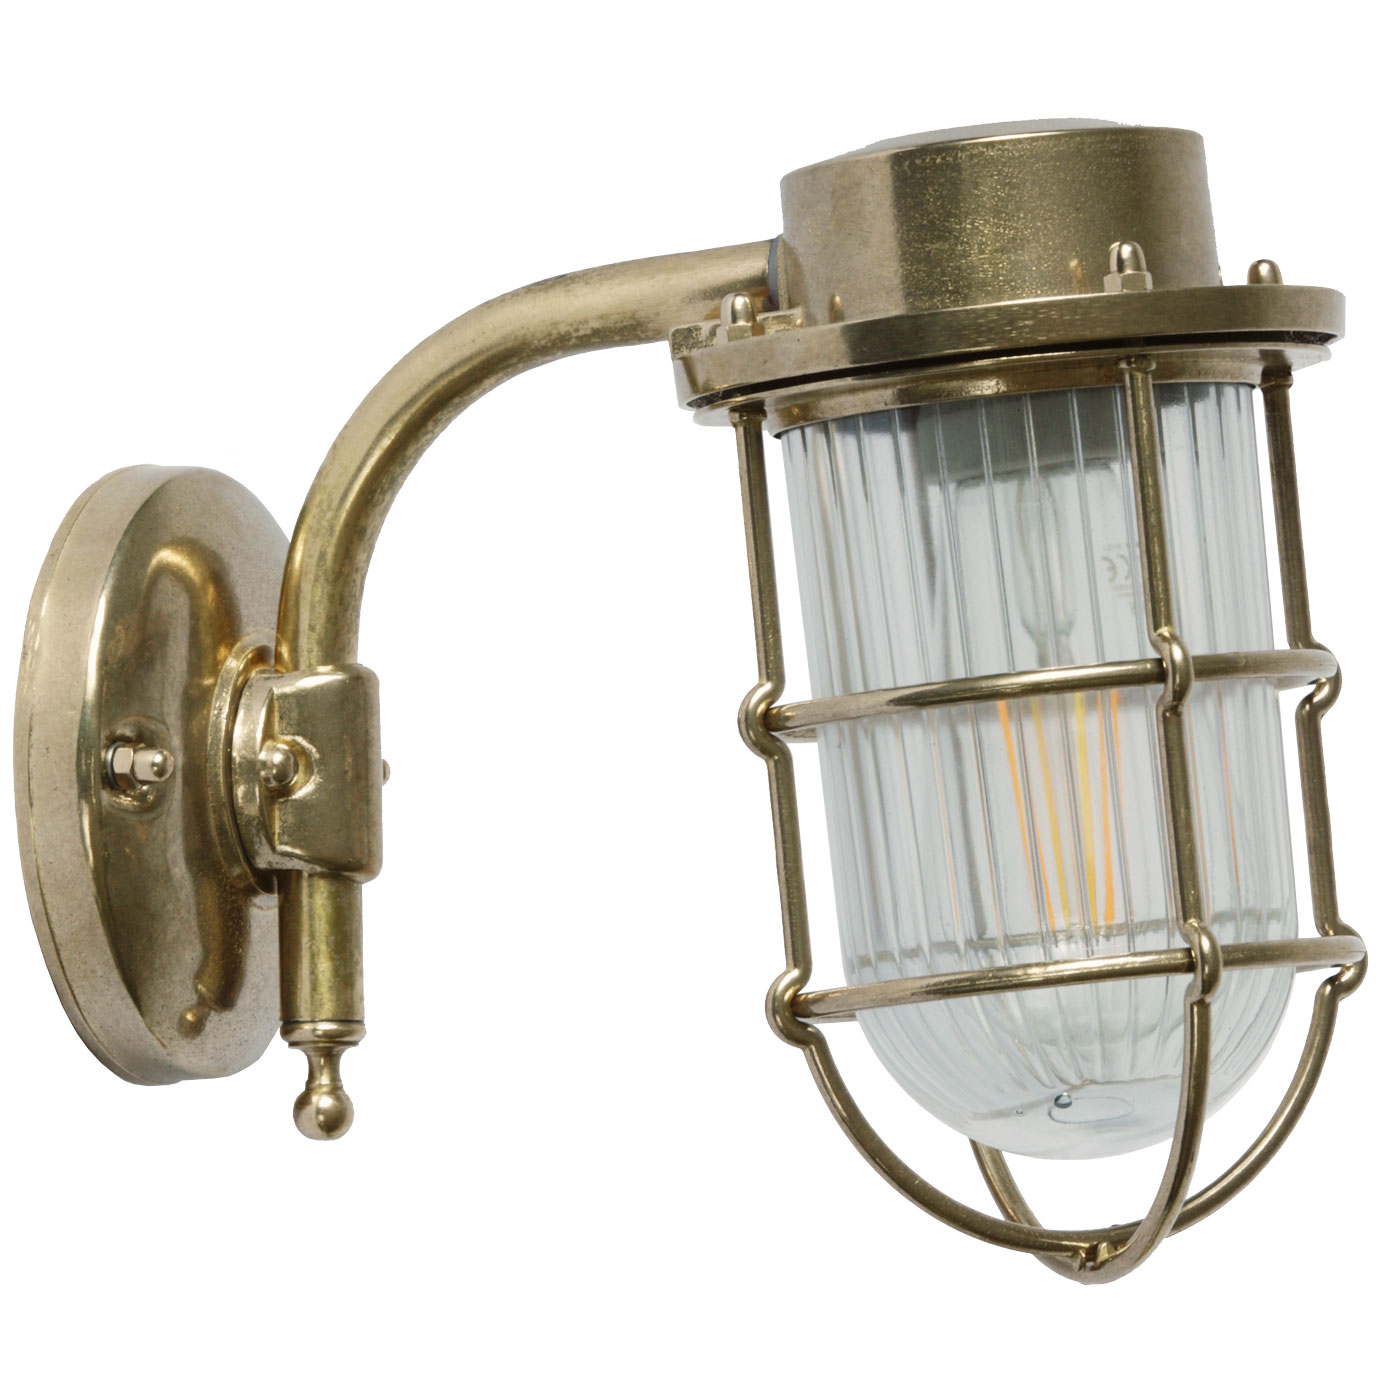 Outdoor brass wall light N° 816 with bracket